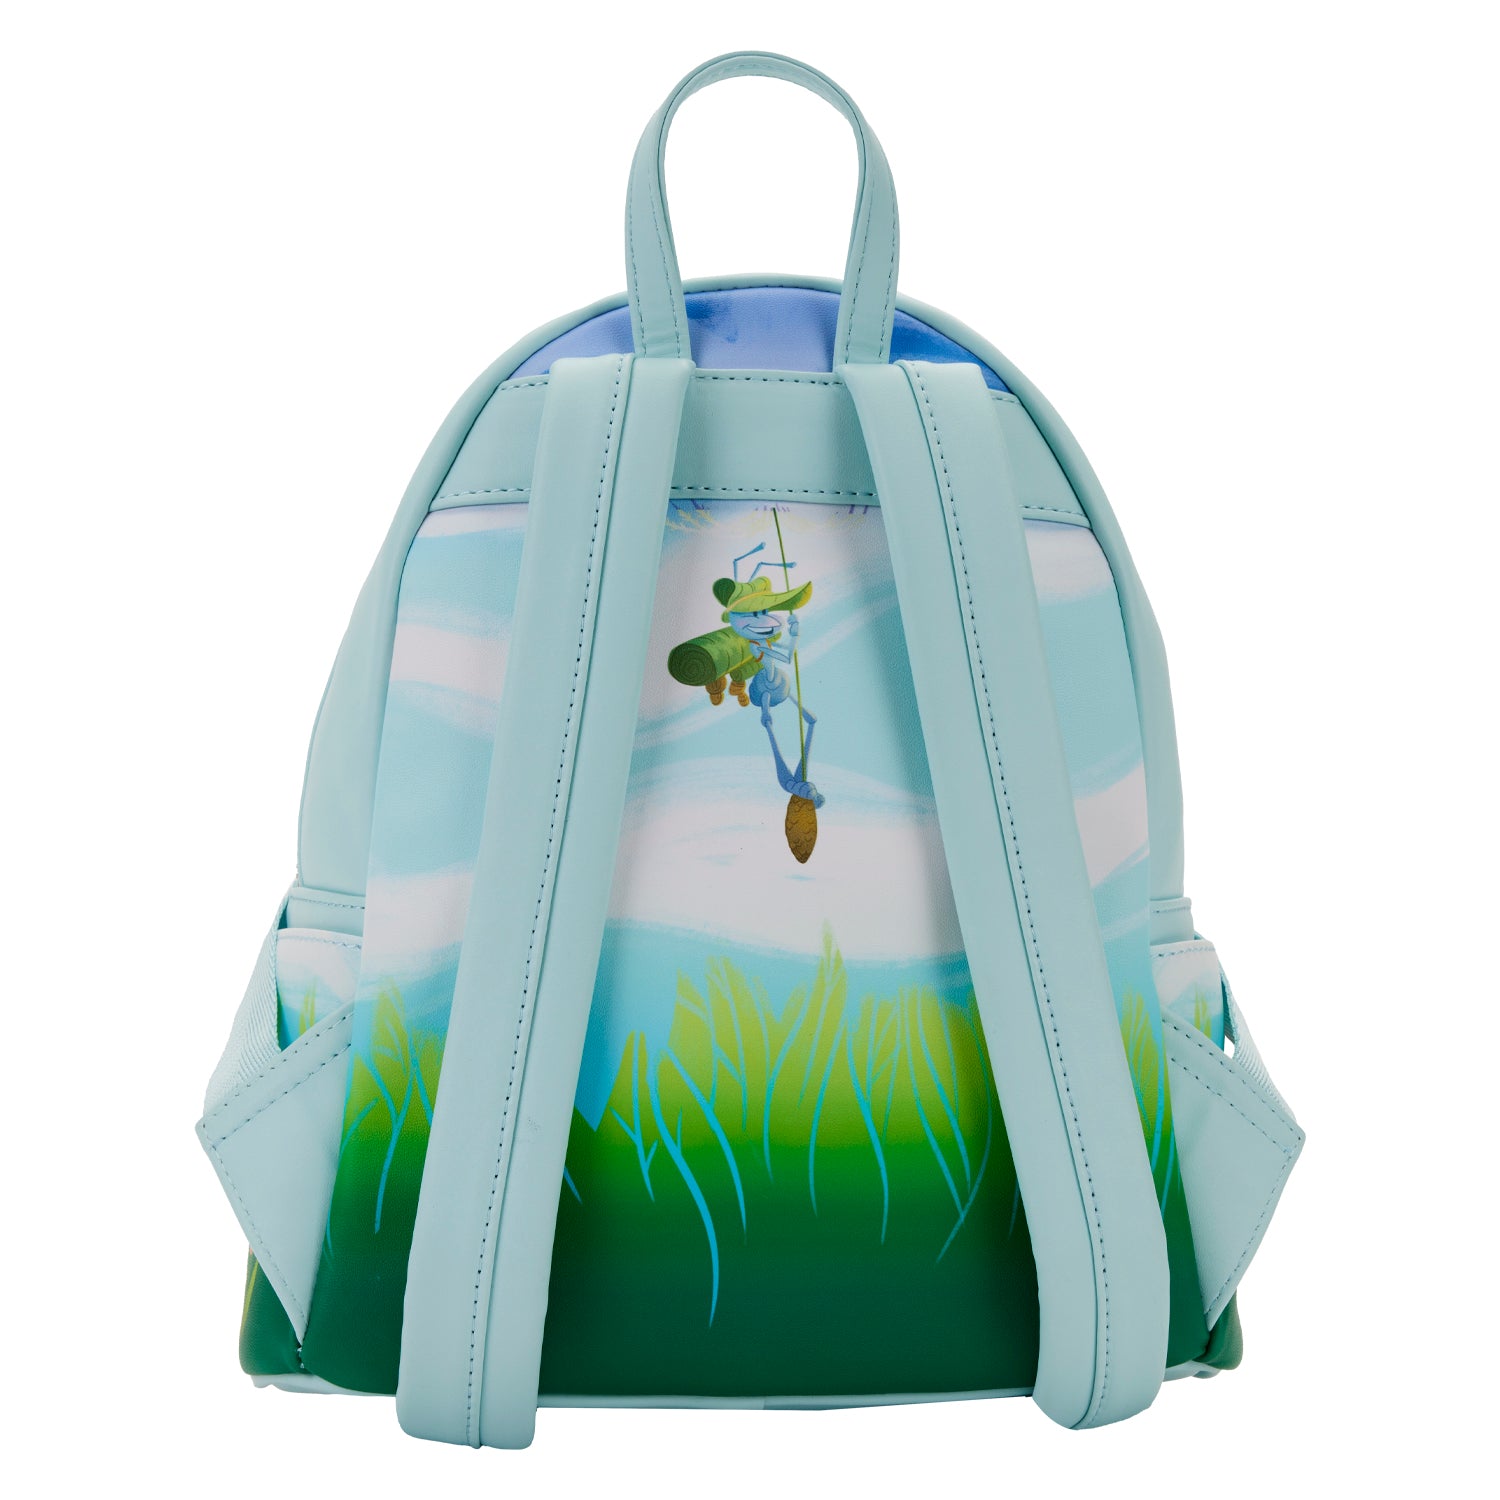 Loungefly x Disney Pixar A Bugs Life Earth Day Mini Backpack